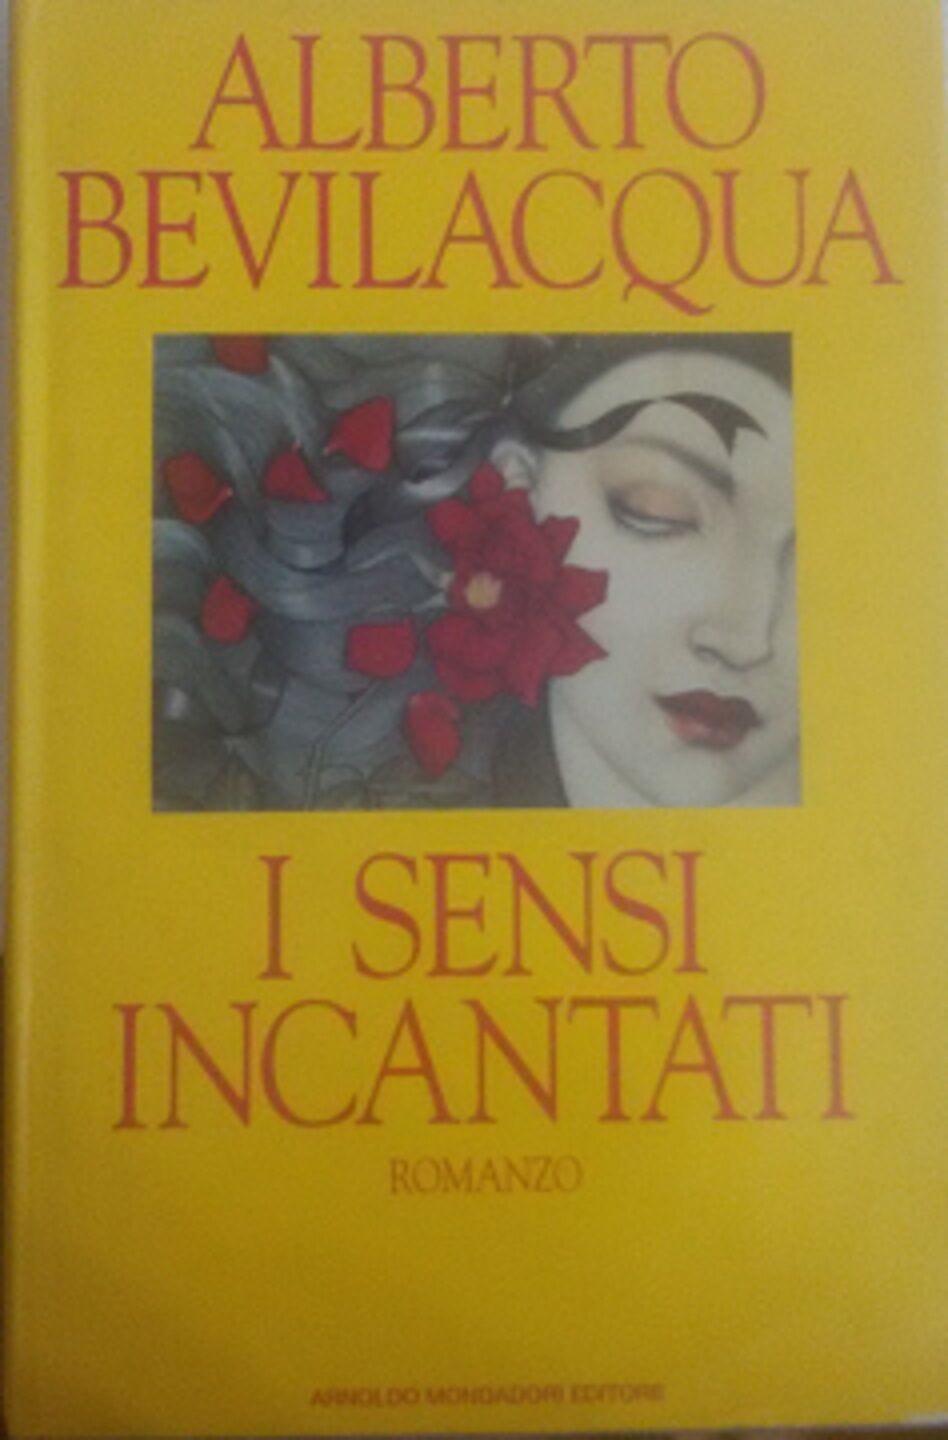  I Sensi incantati romanzo -  Alberto Bevilacqua,  1991 -  Mondadori - C